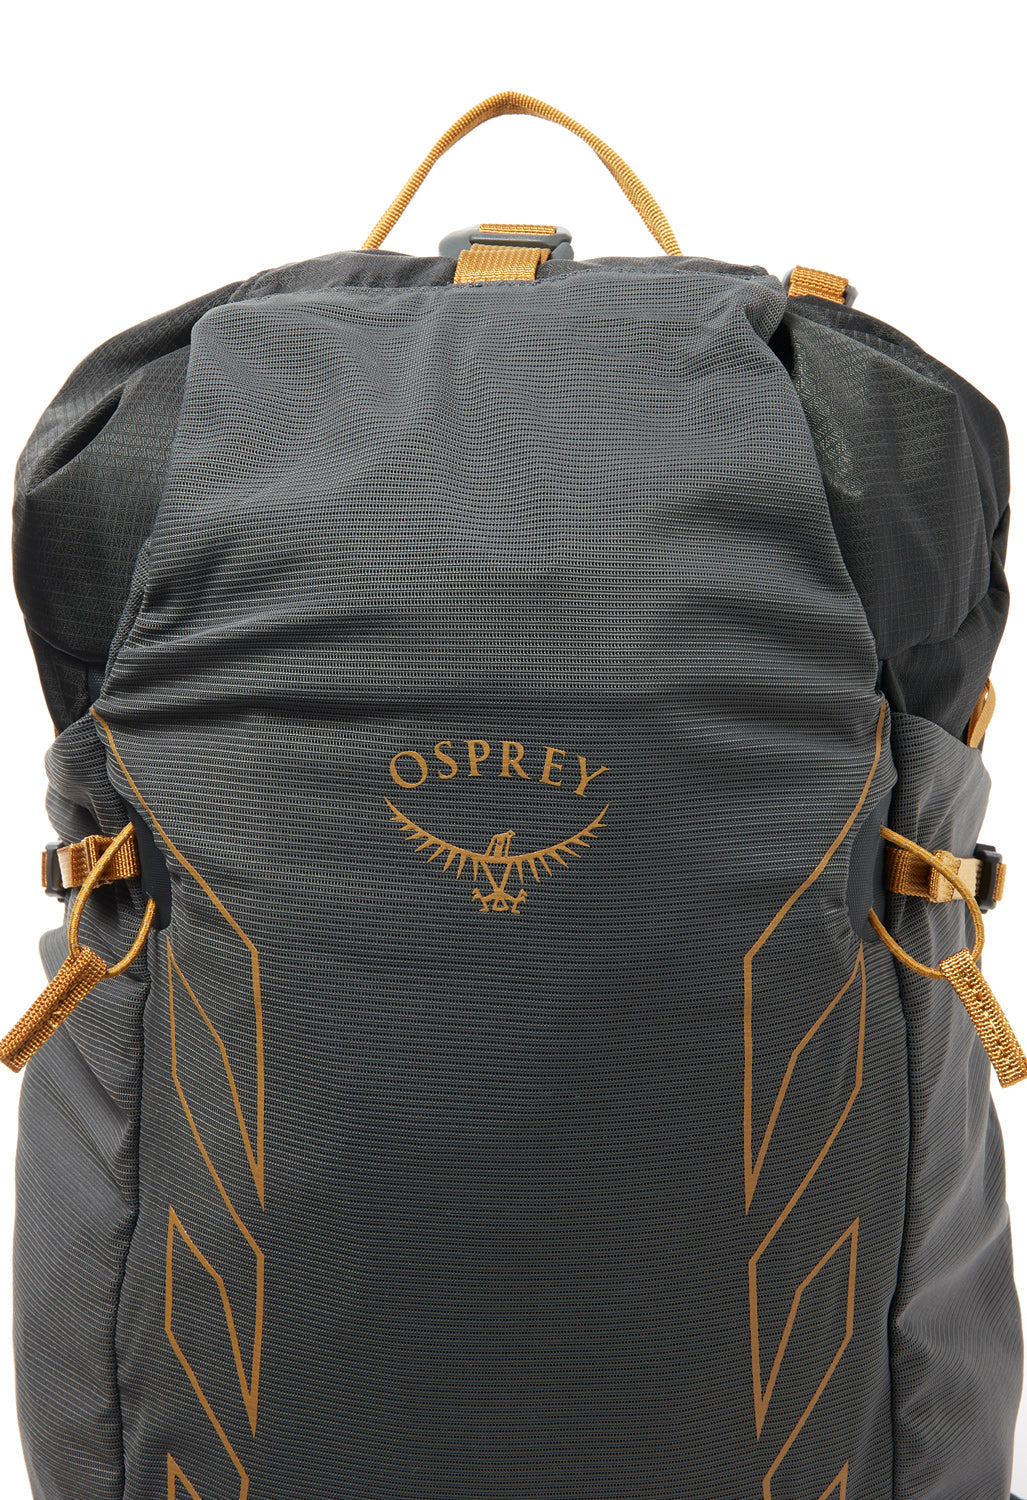 Osprey Talon Velocity 20 - Dark Charcoal / Tumbleweed Yellow